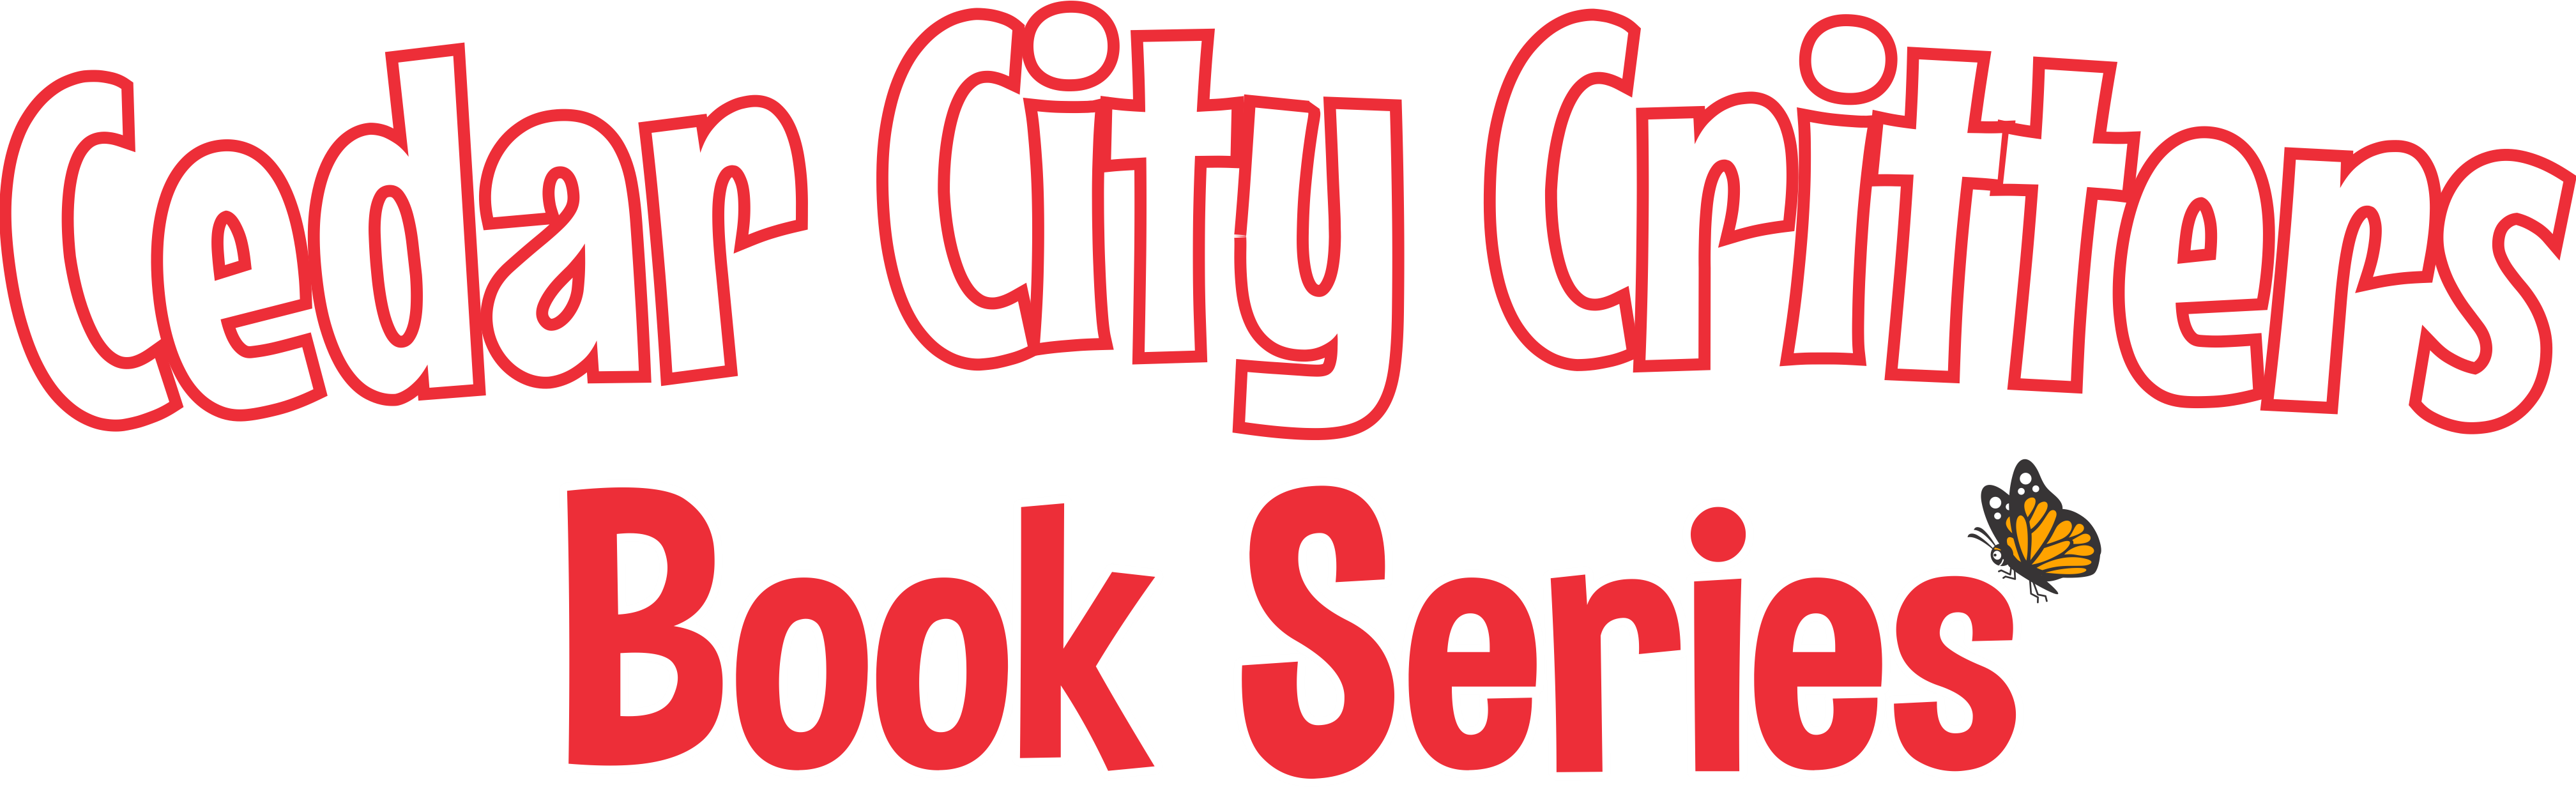 Cedar City Critters Book Series